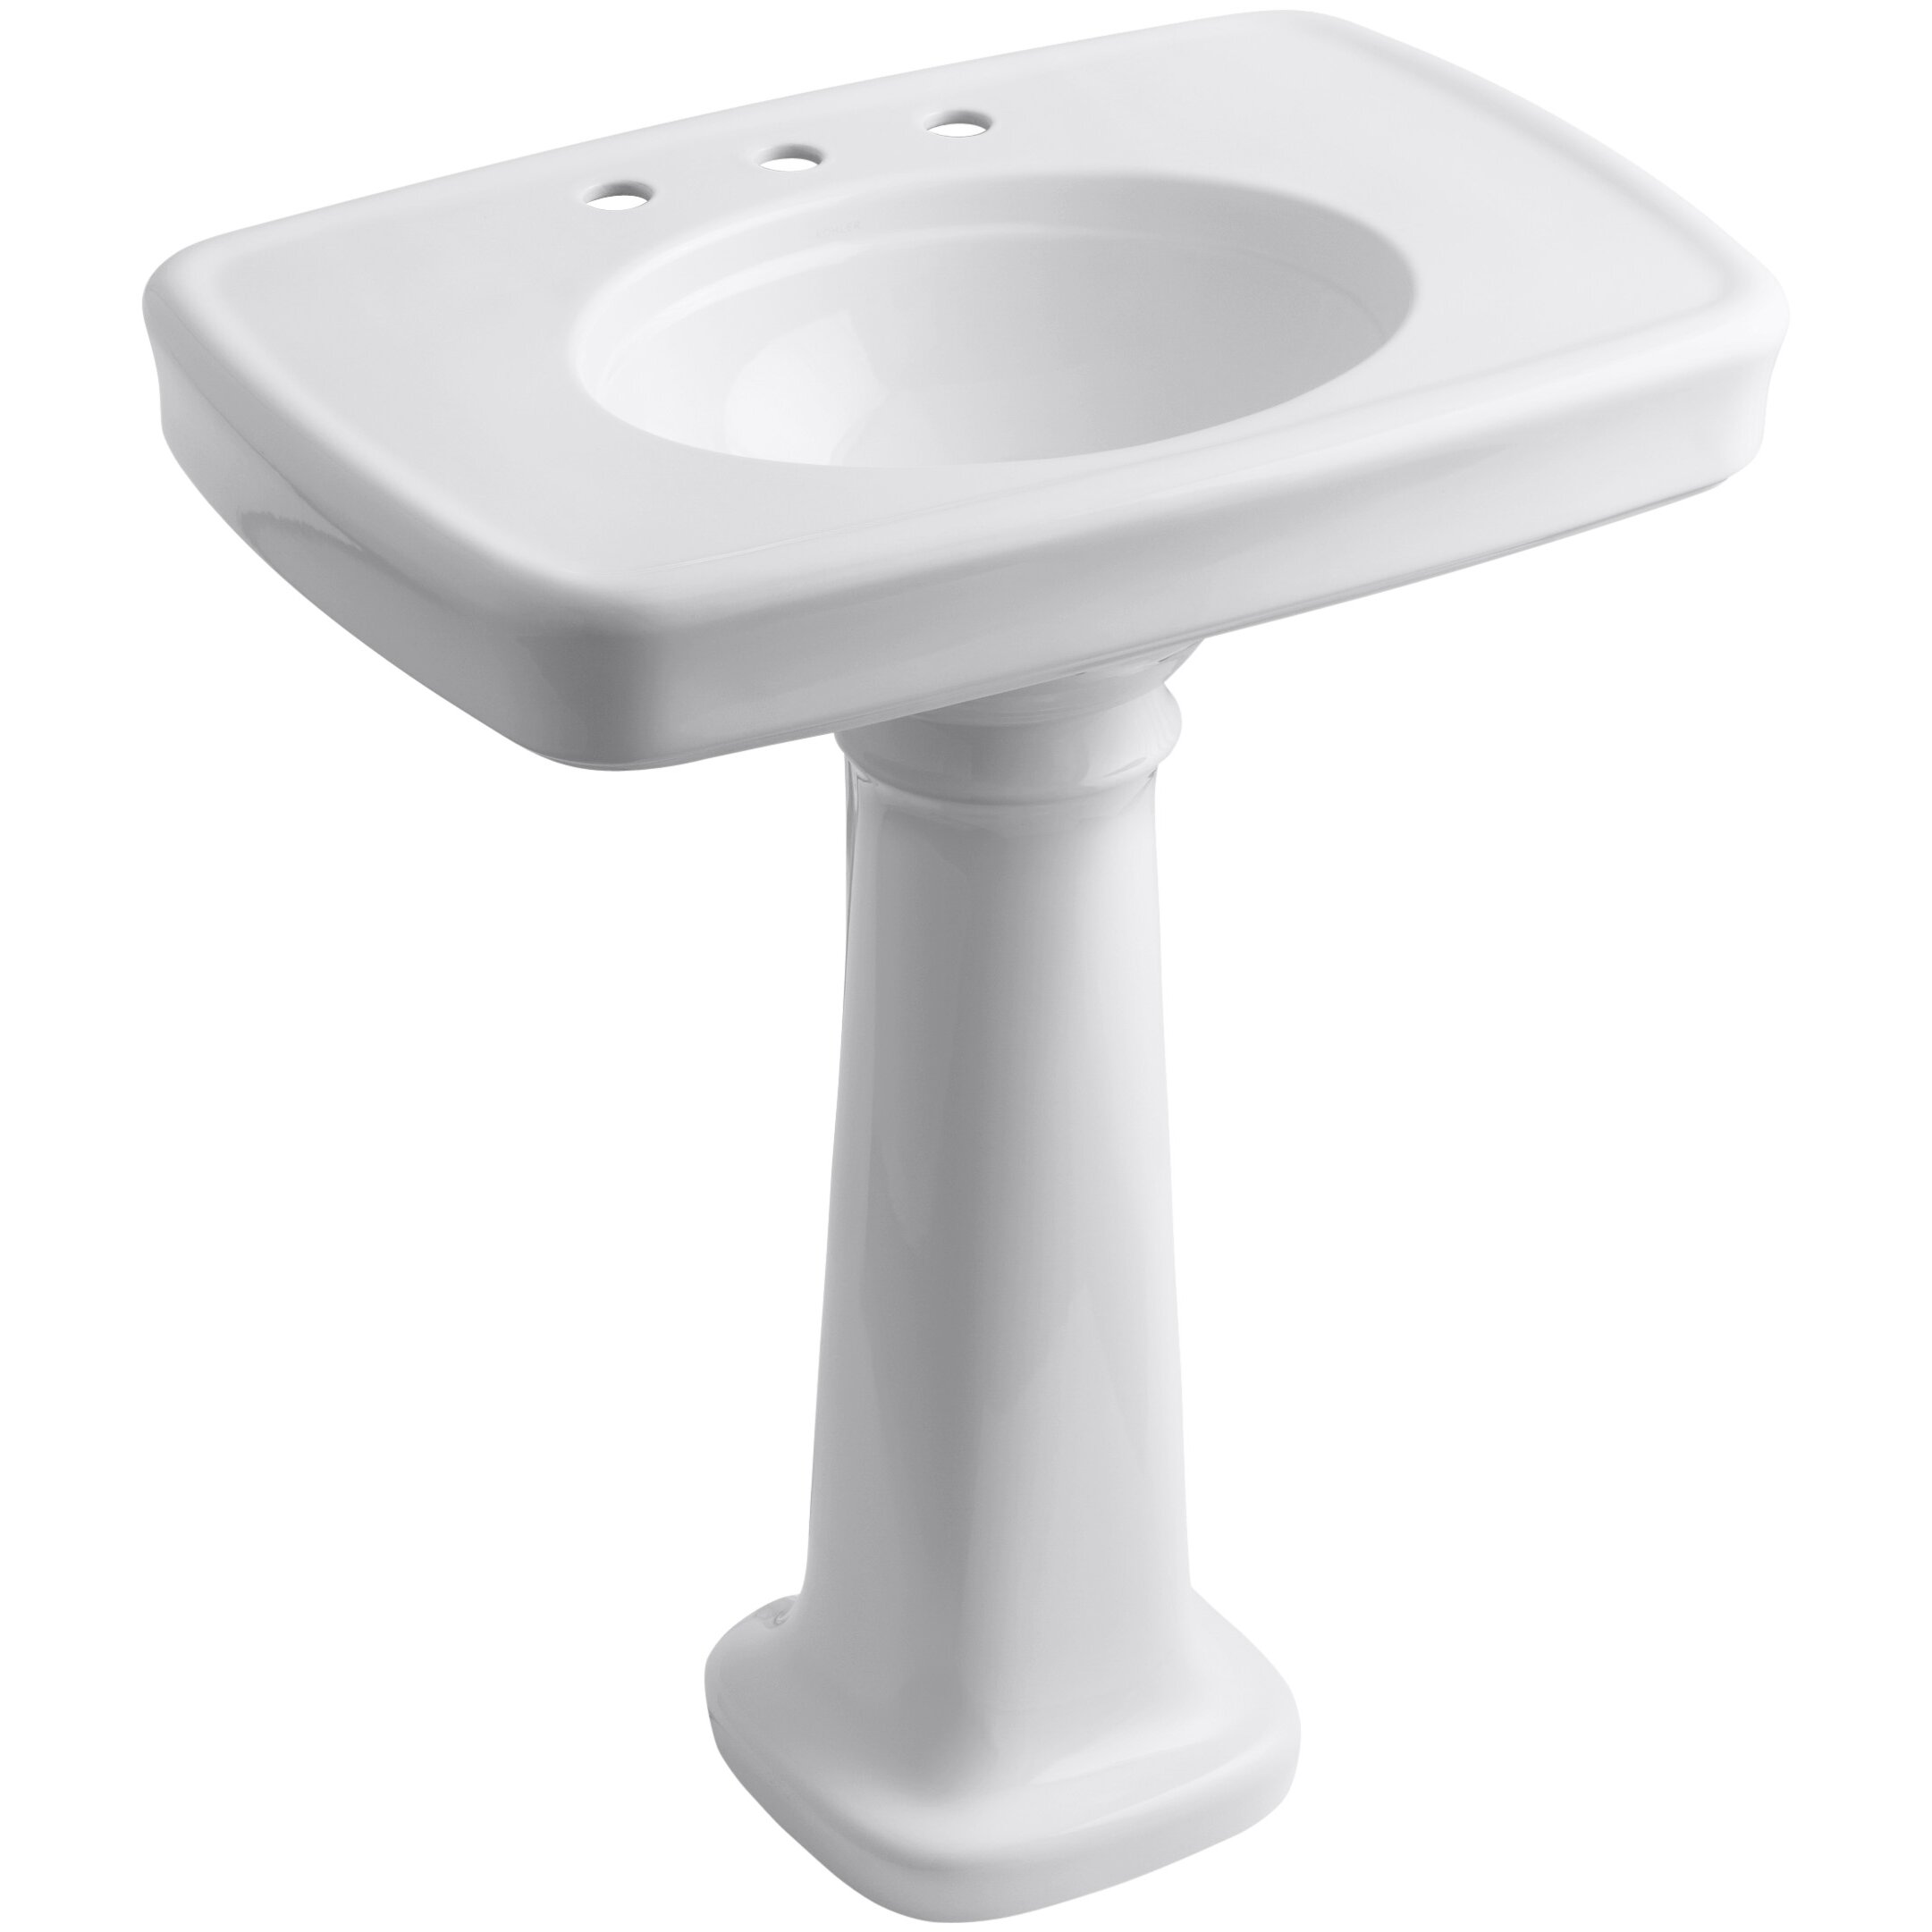 Pedestal Bathroom Sink dact